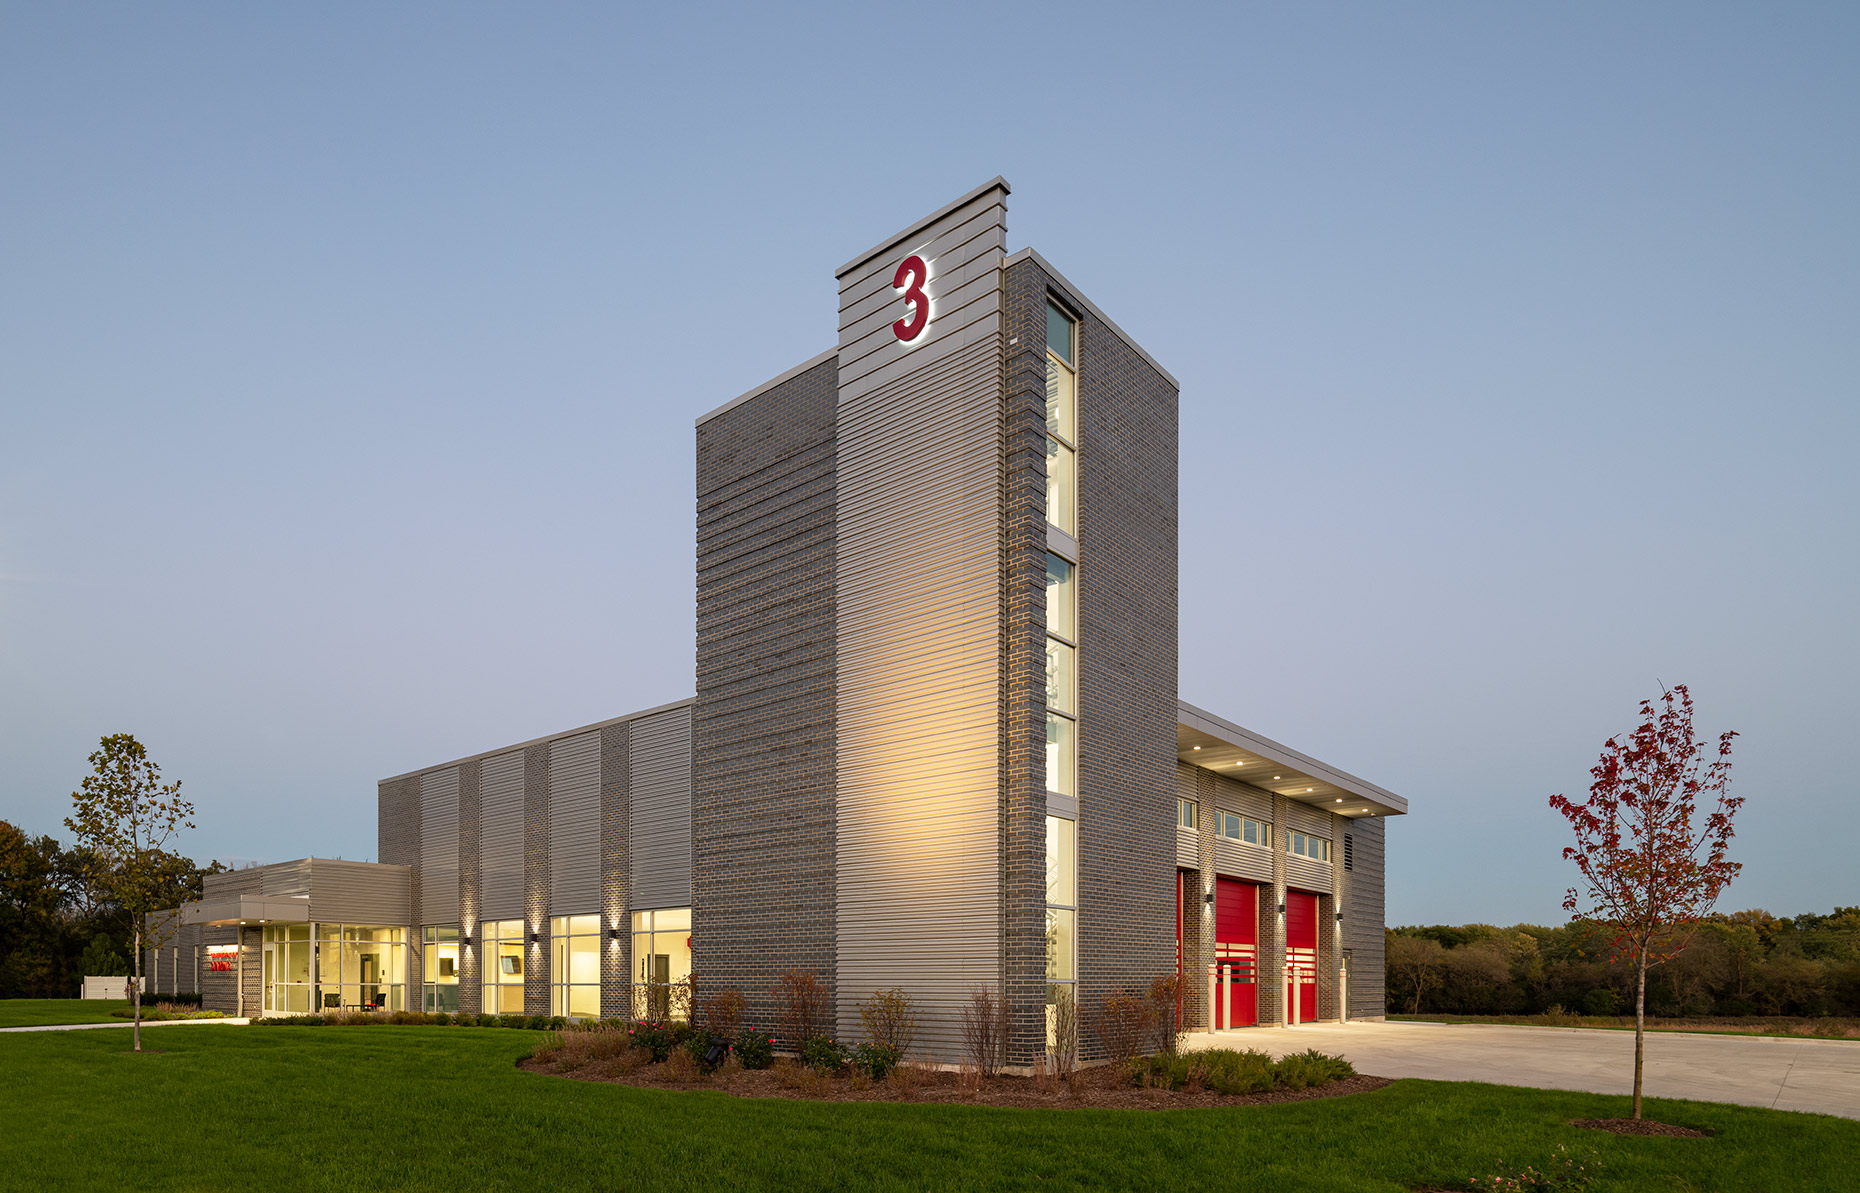 Gurnee Fire Station 3, Illinois